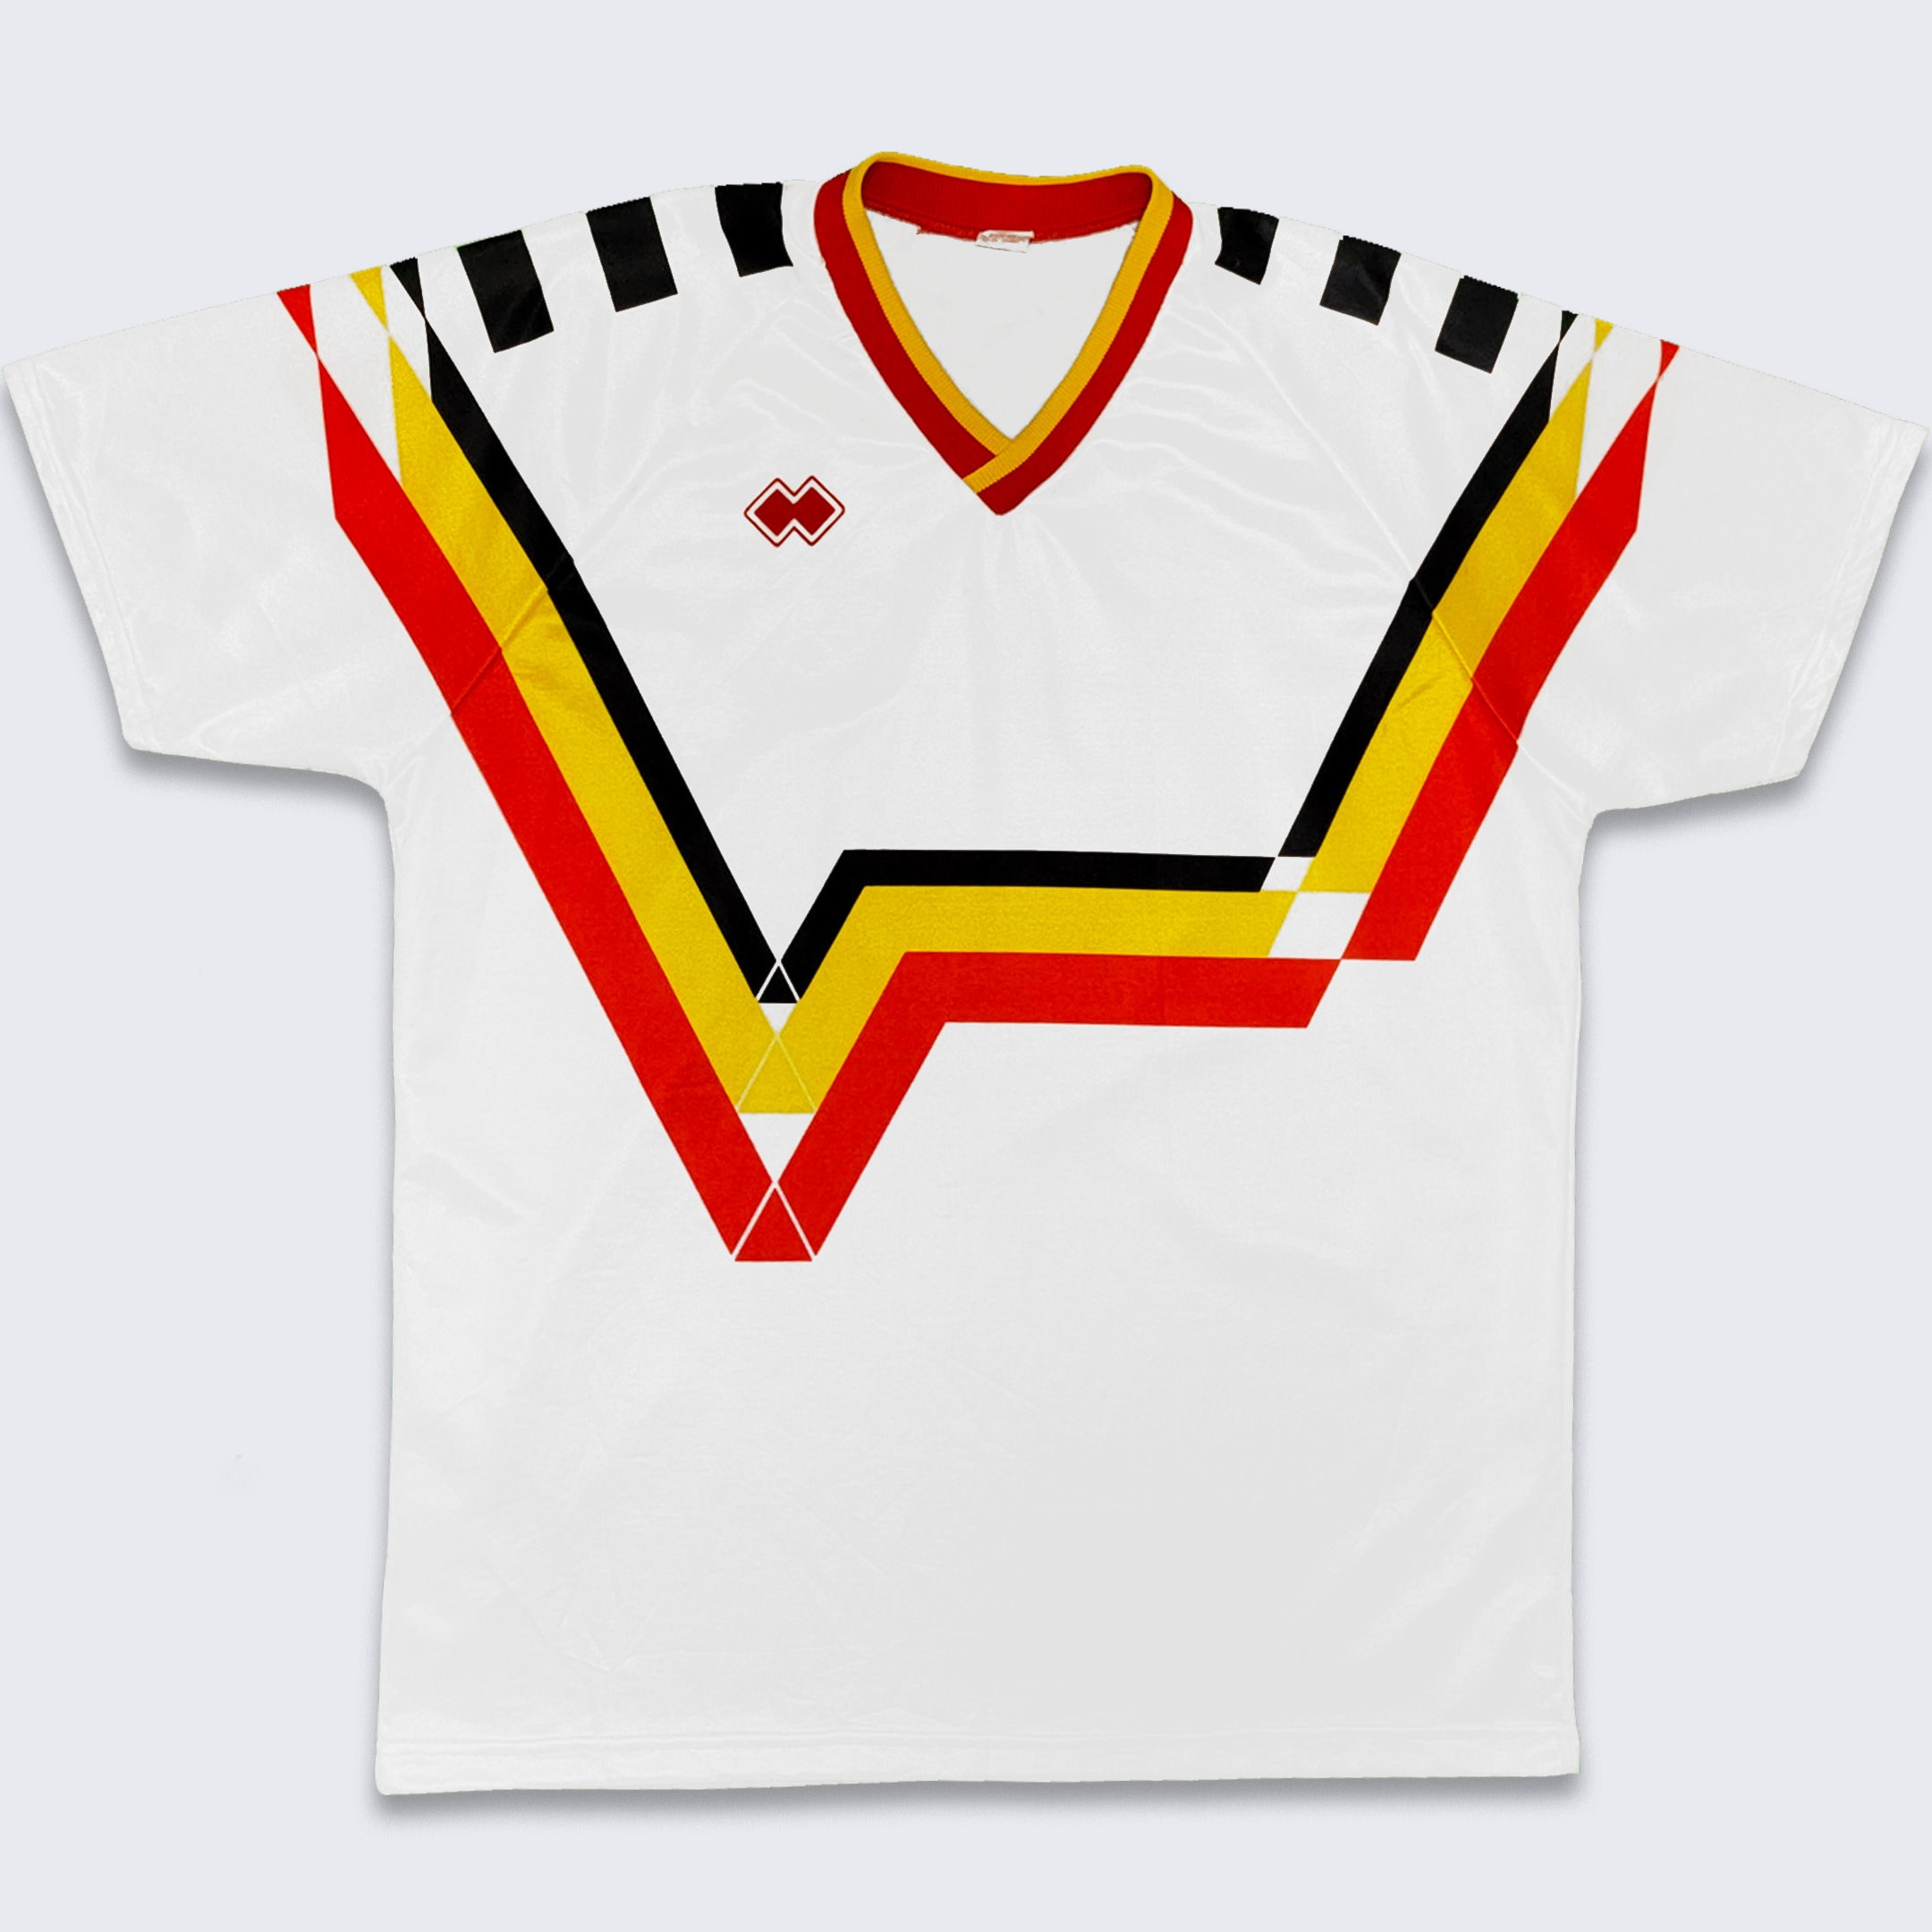 Apparel Colombia Soccer Jersey Men's T-Shirt - AliExpress